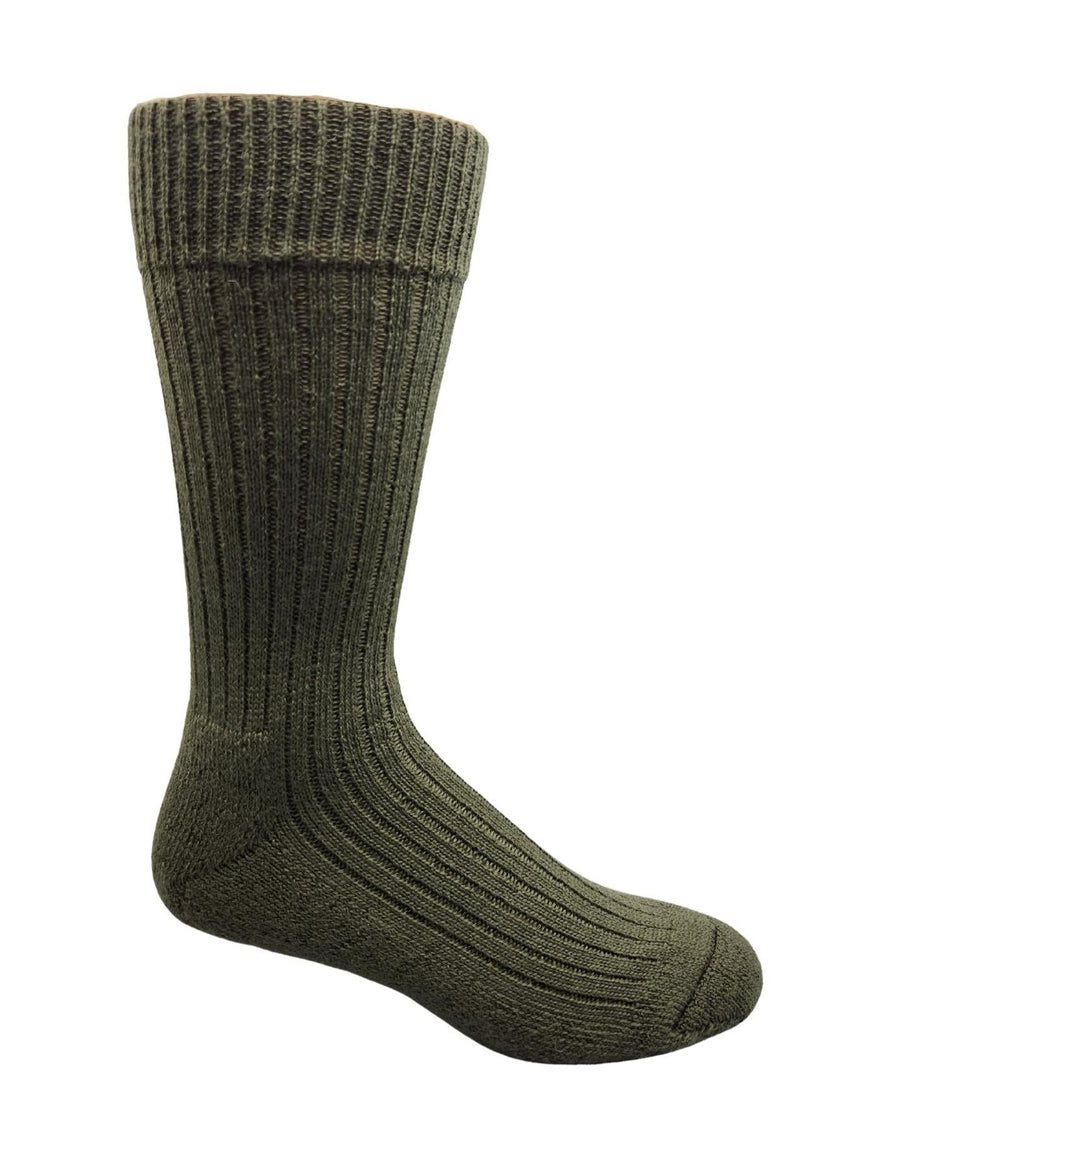 Merino Wool Socks – Great Sox